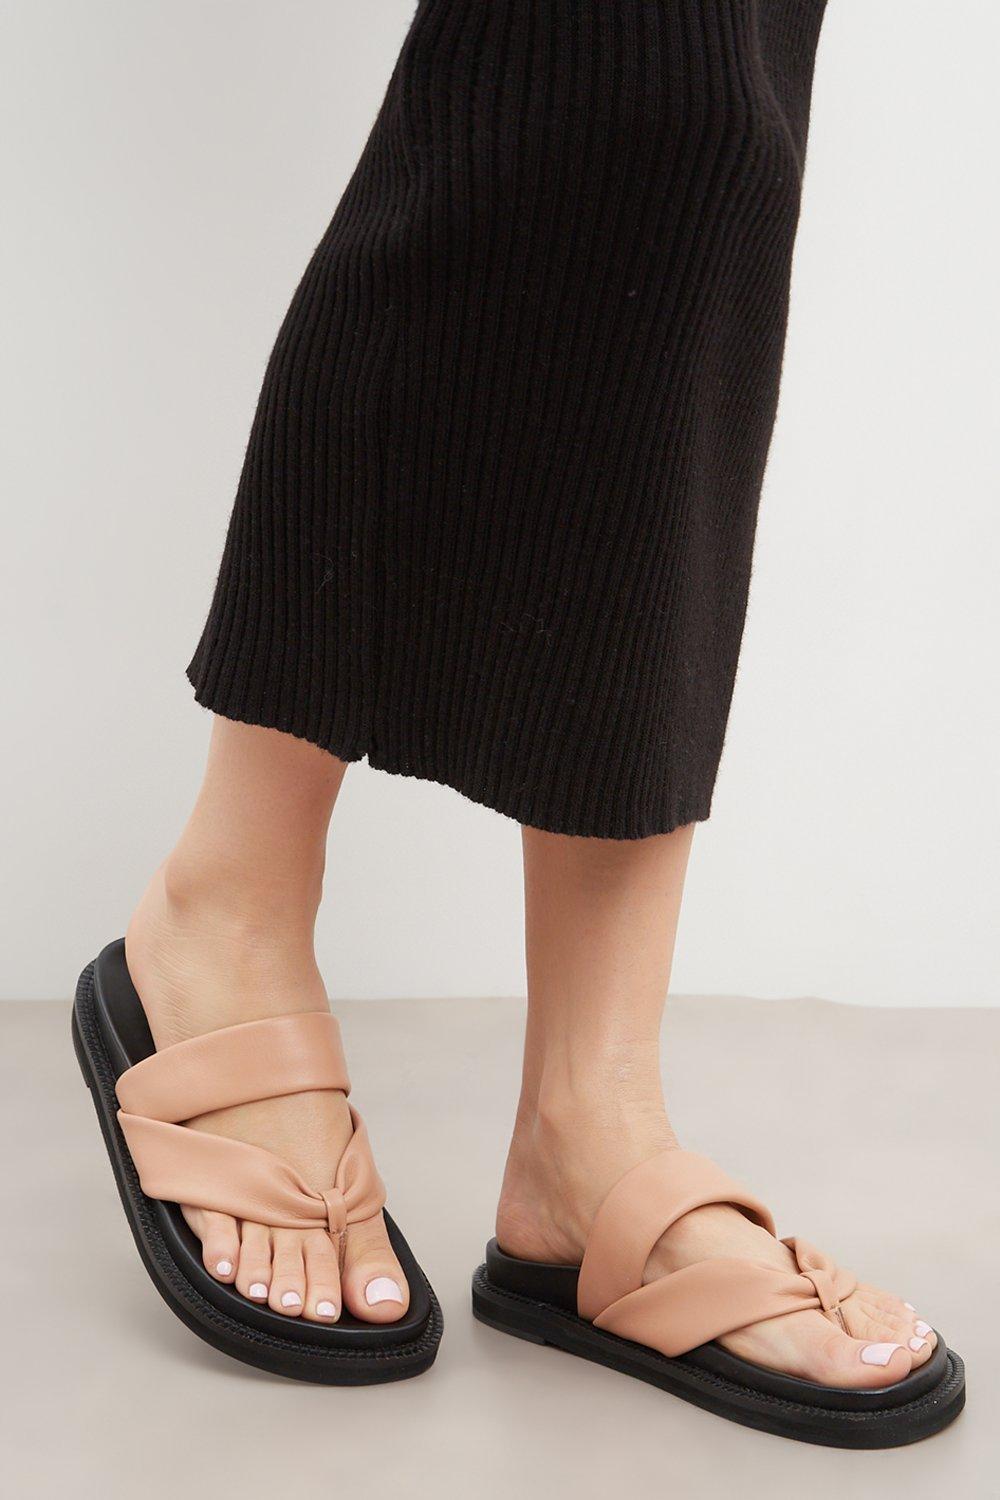 Womens Principles: Ffion Leather Toe Post Flat Sandal